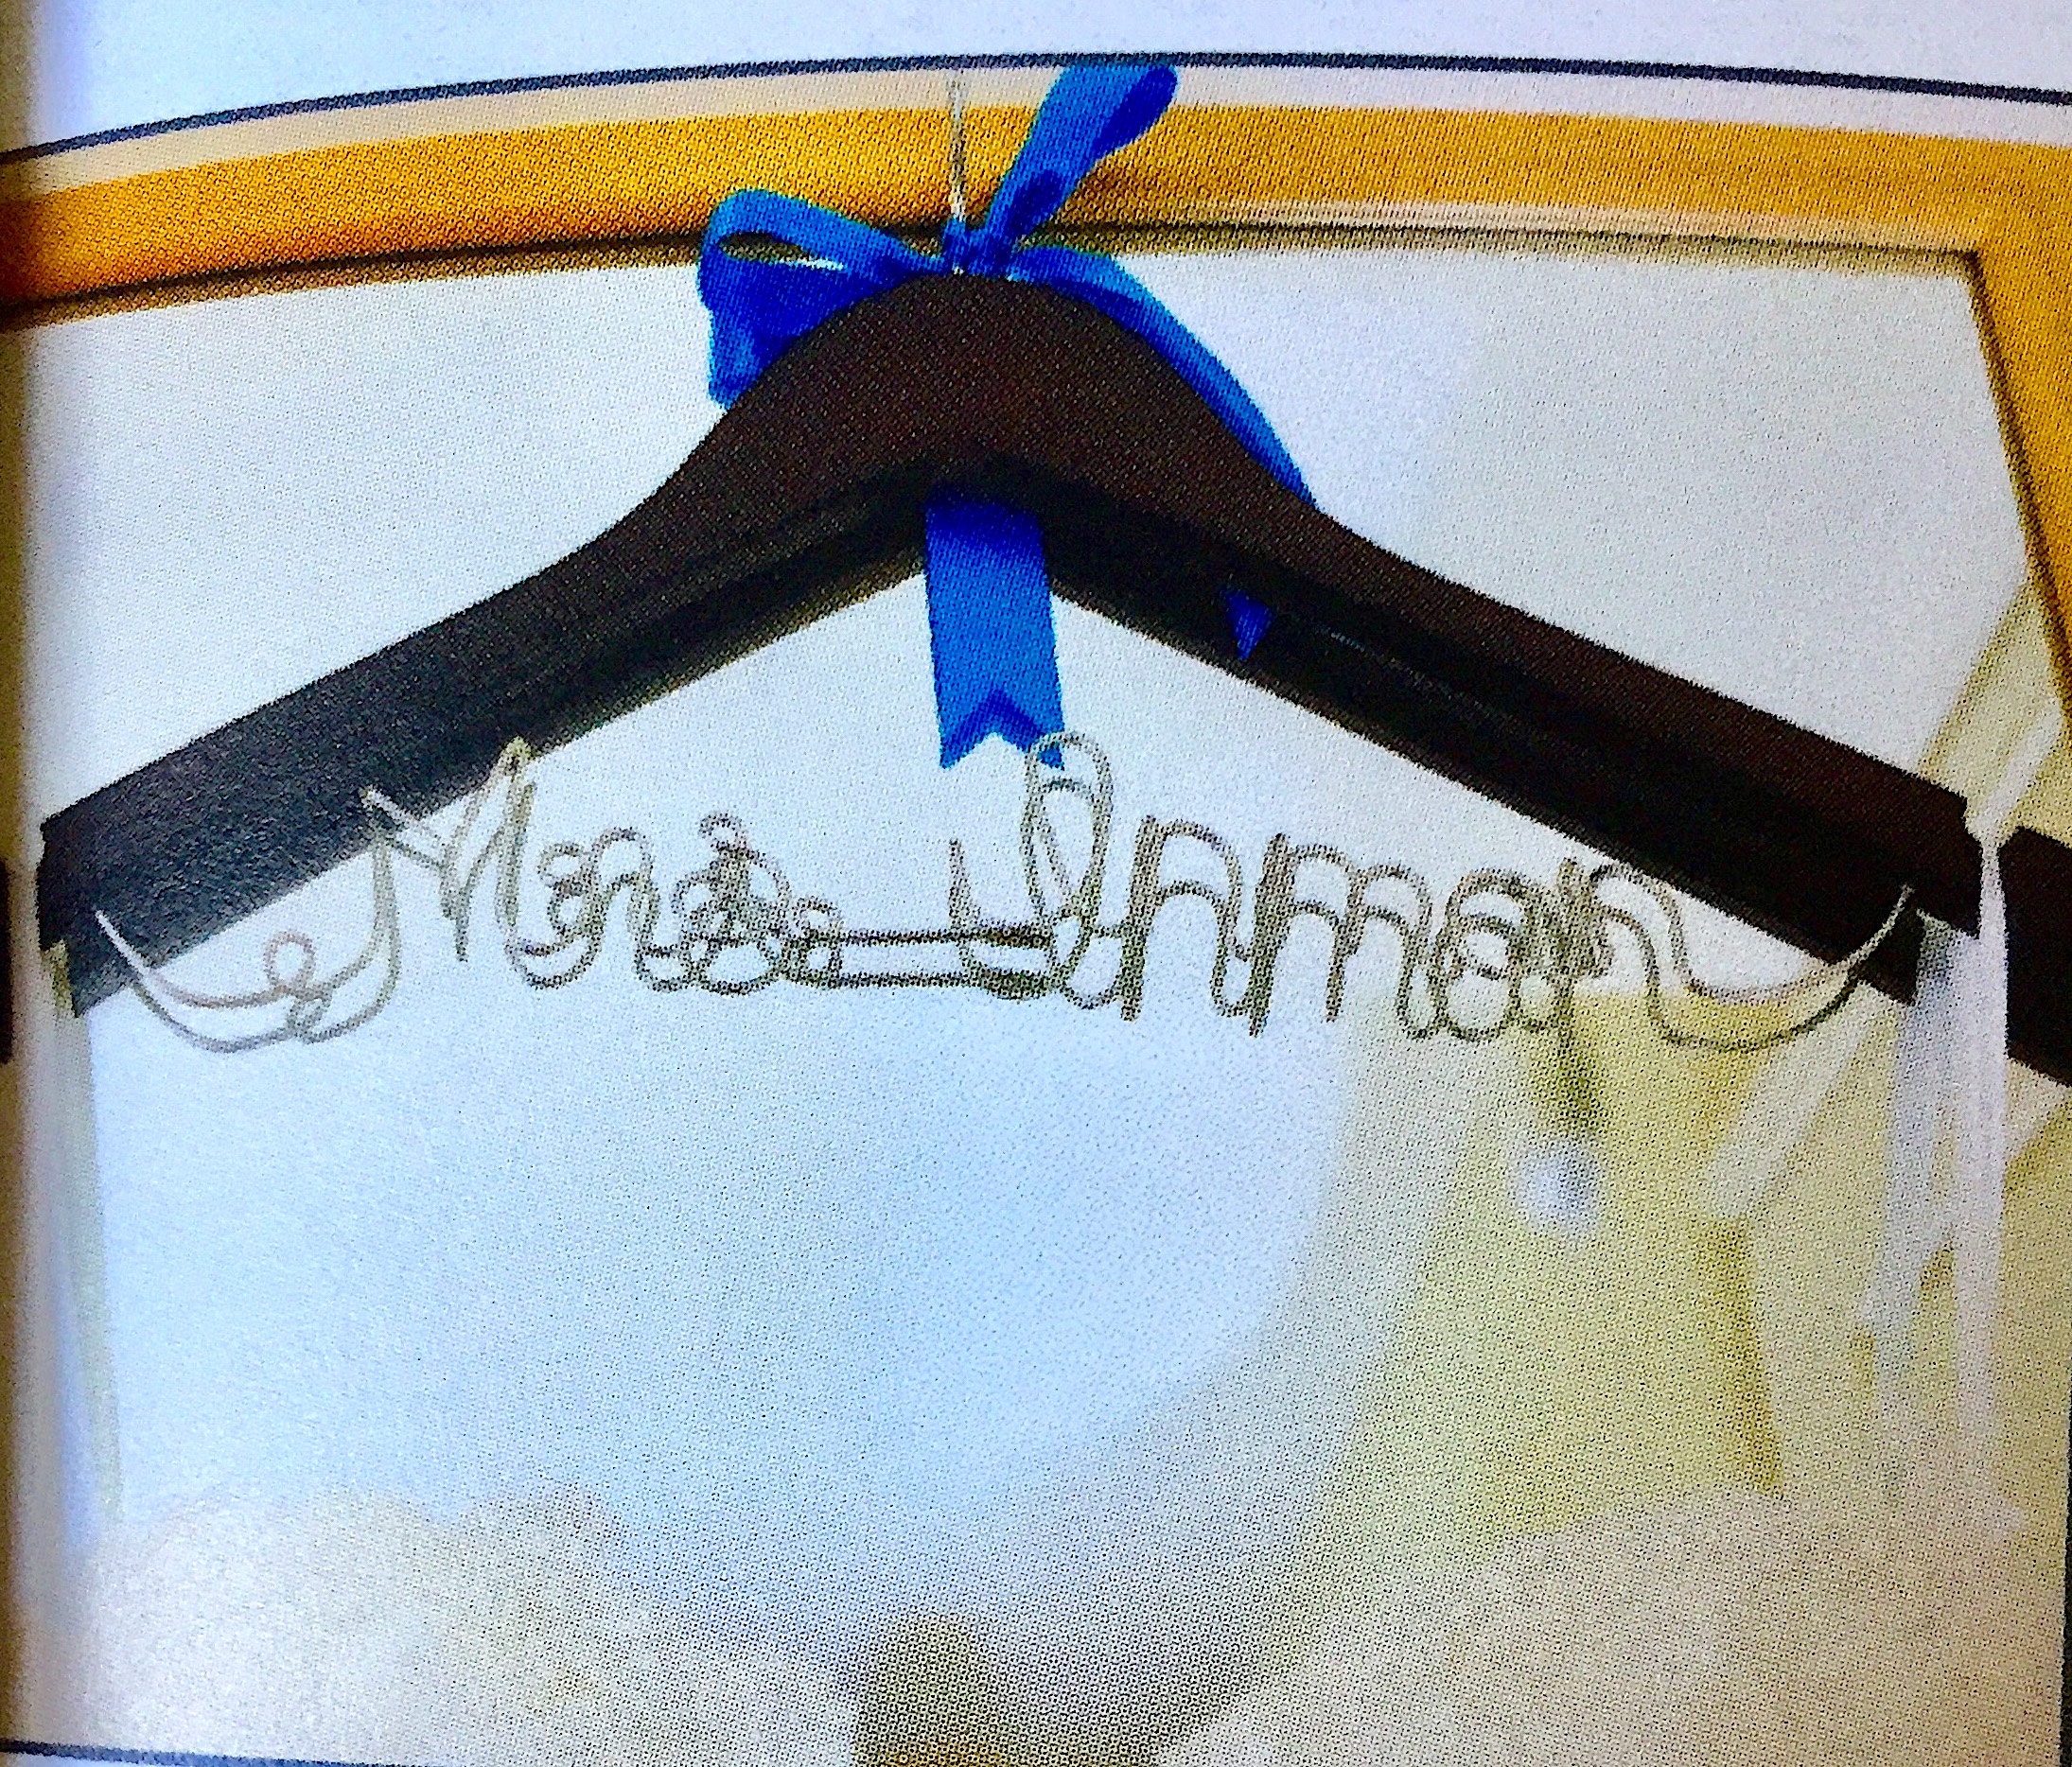 Devi Ohira Mrs. Inman Etsy hanger bridal gift practical best gift ideas personalized.jpg